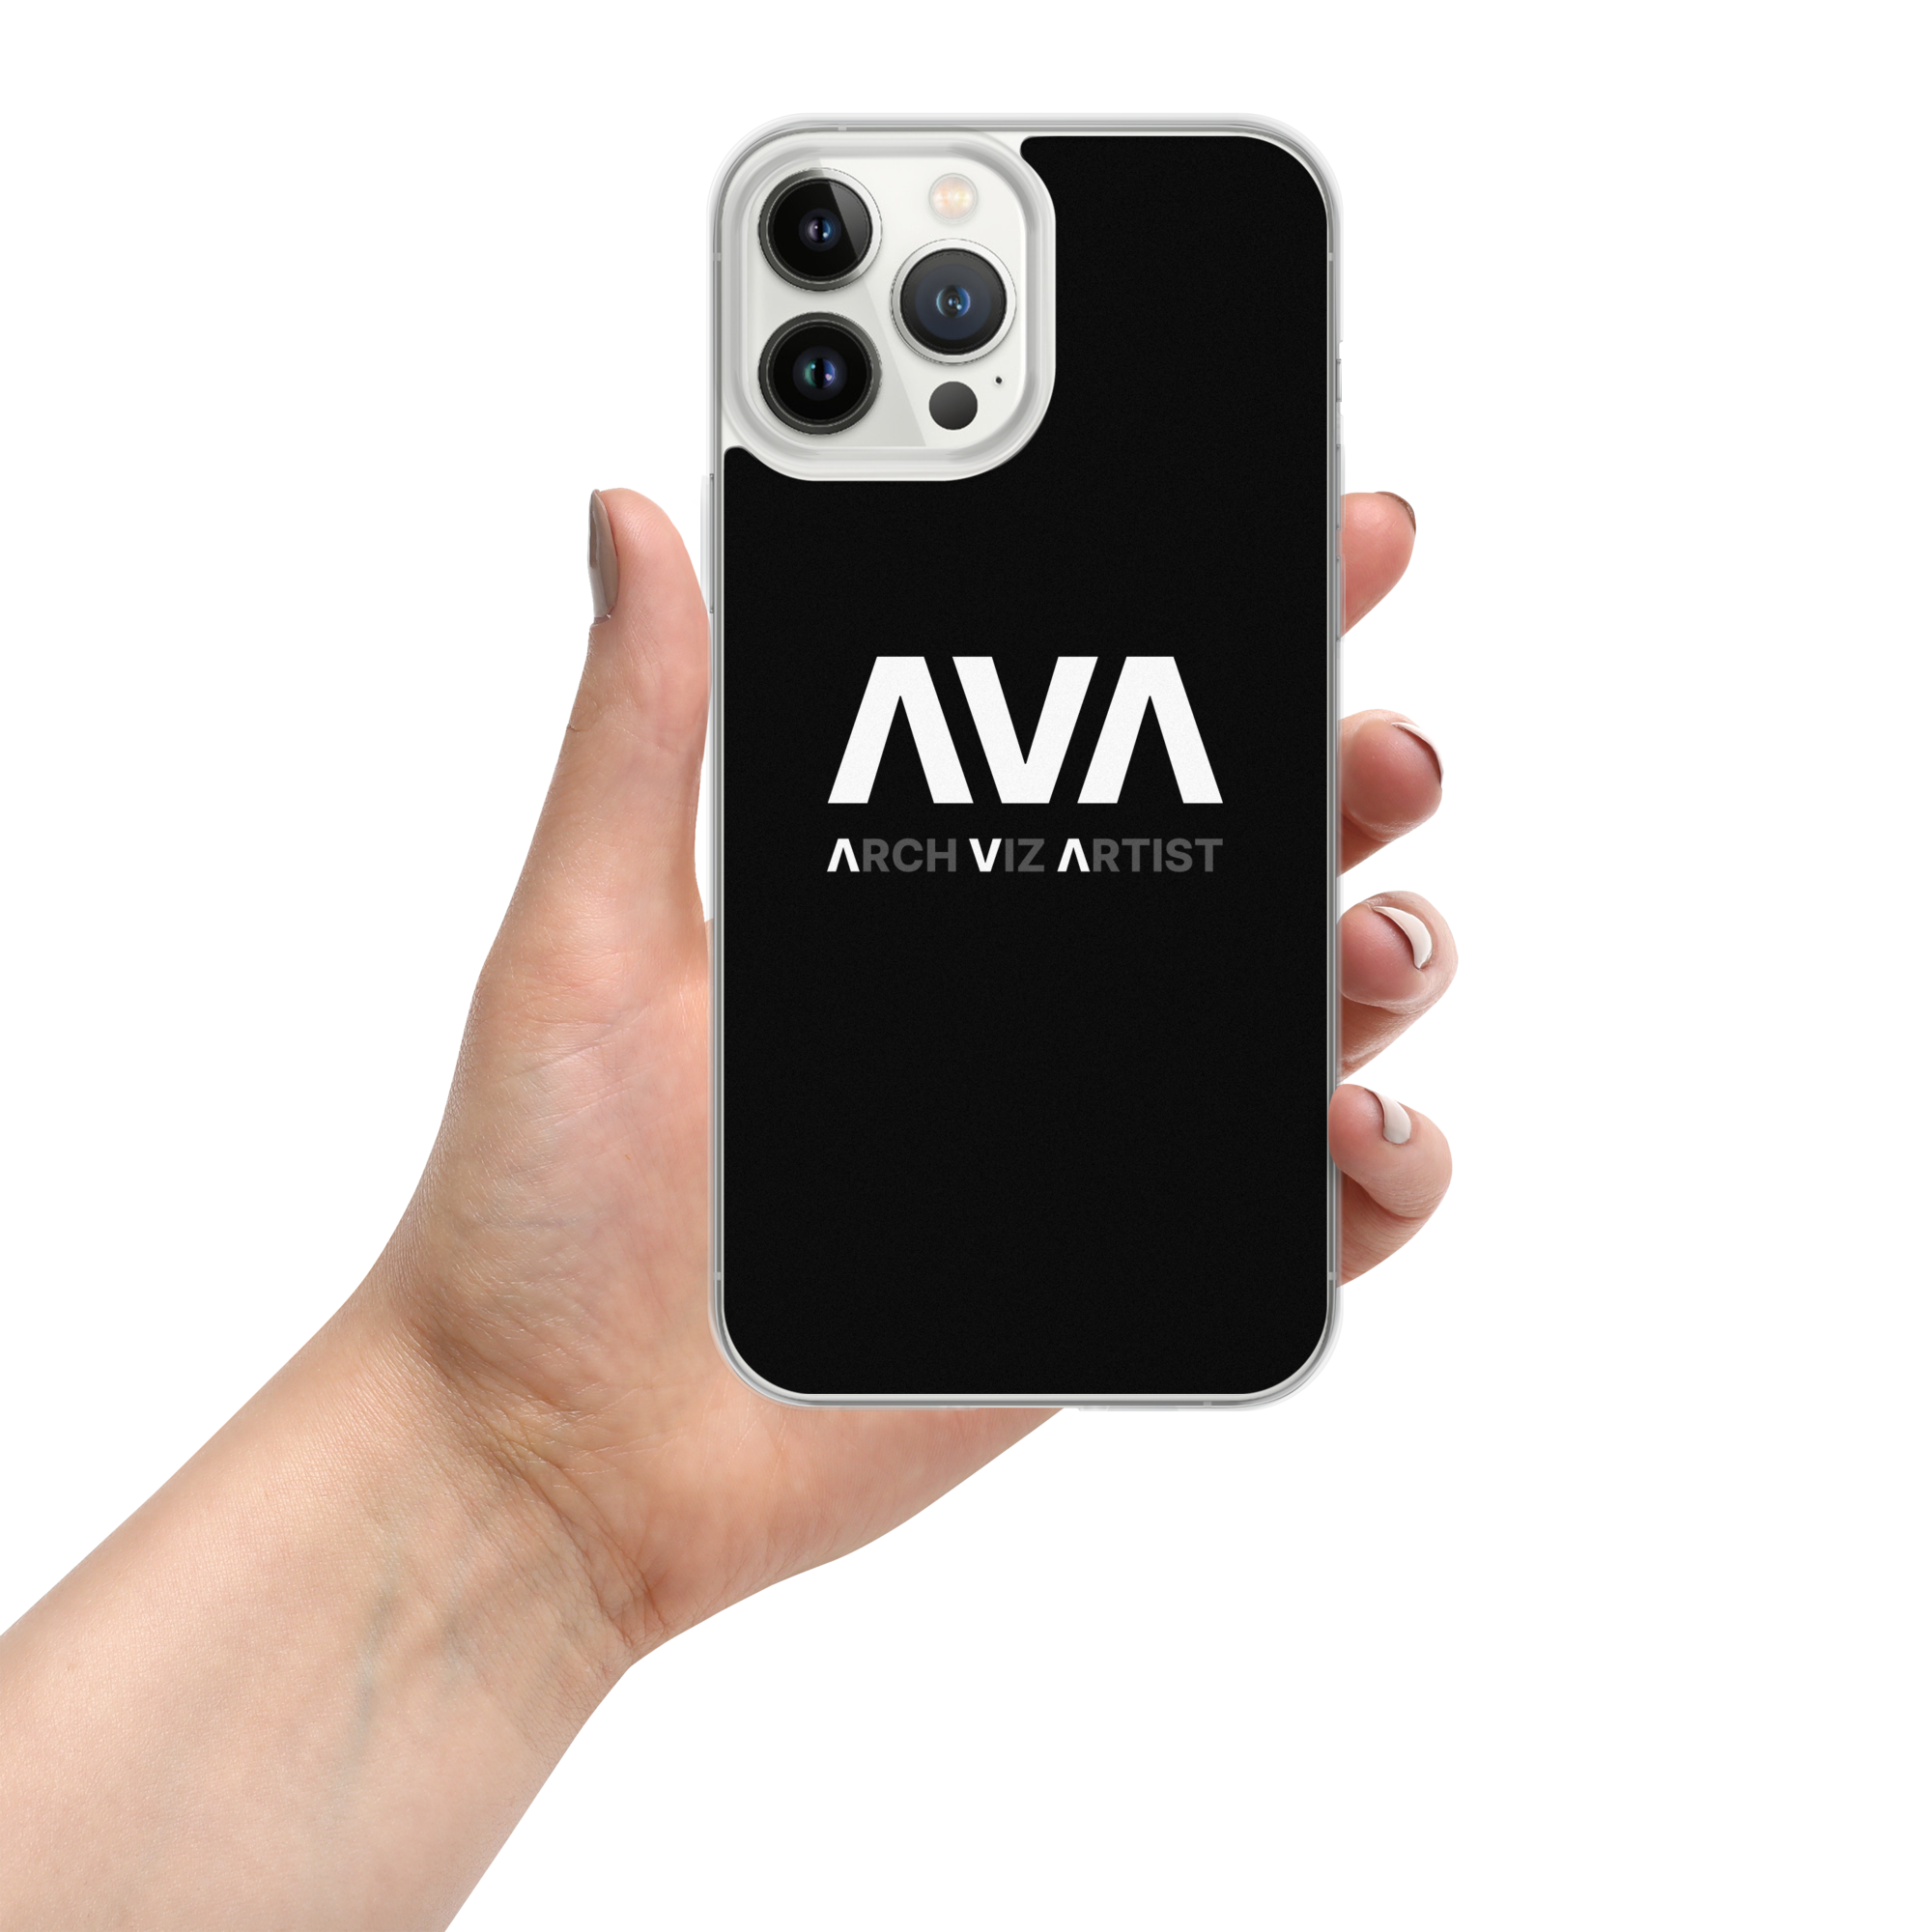 AVA iPhone Case